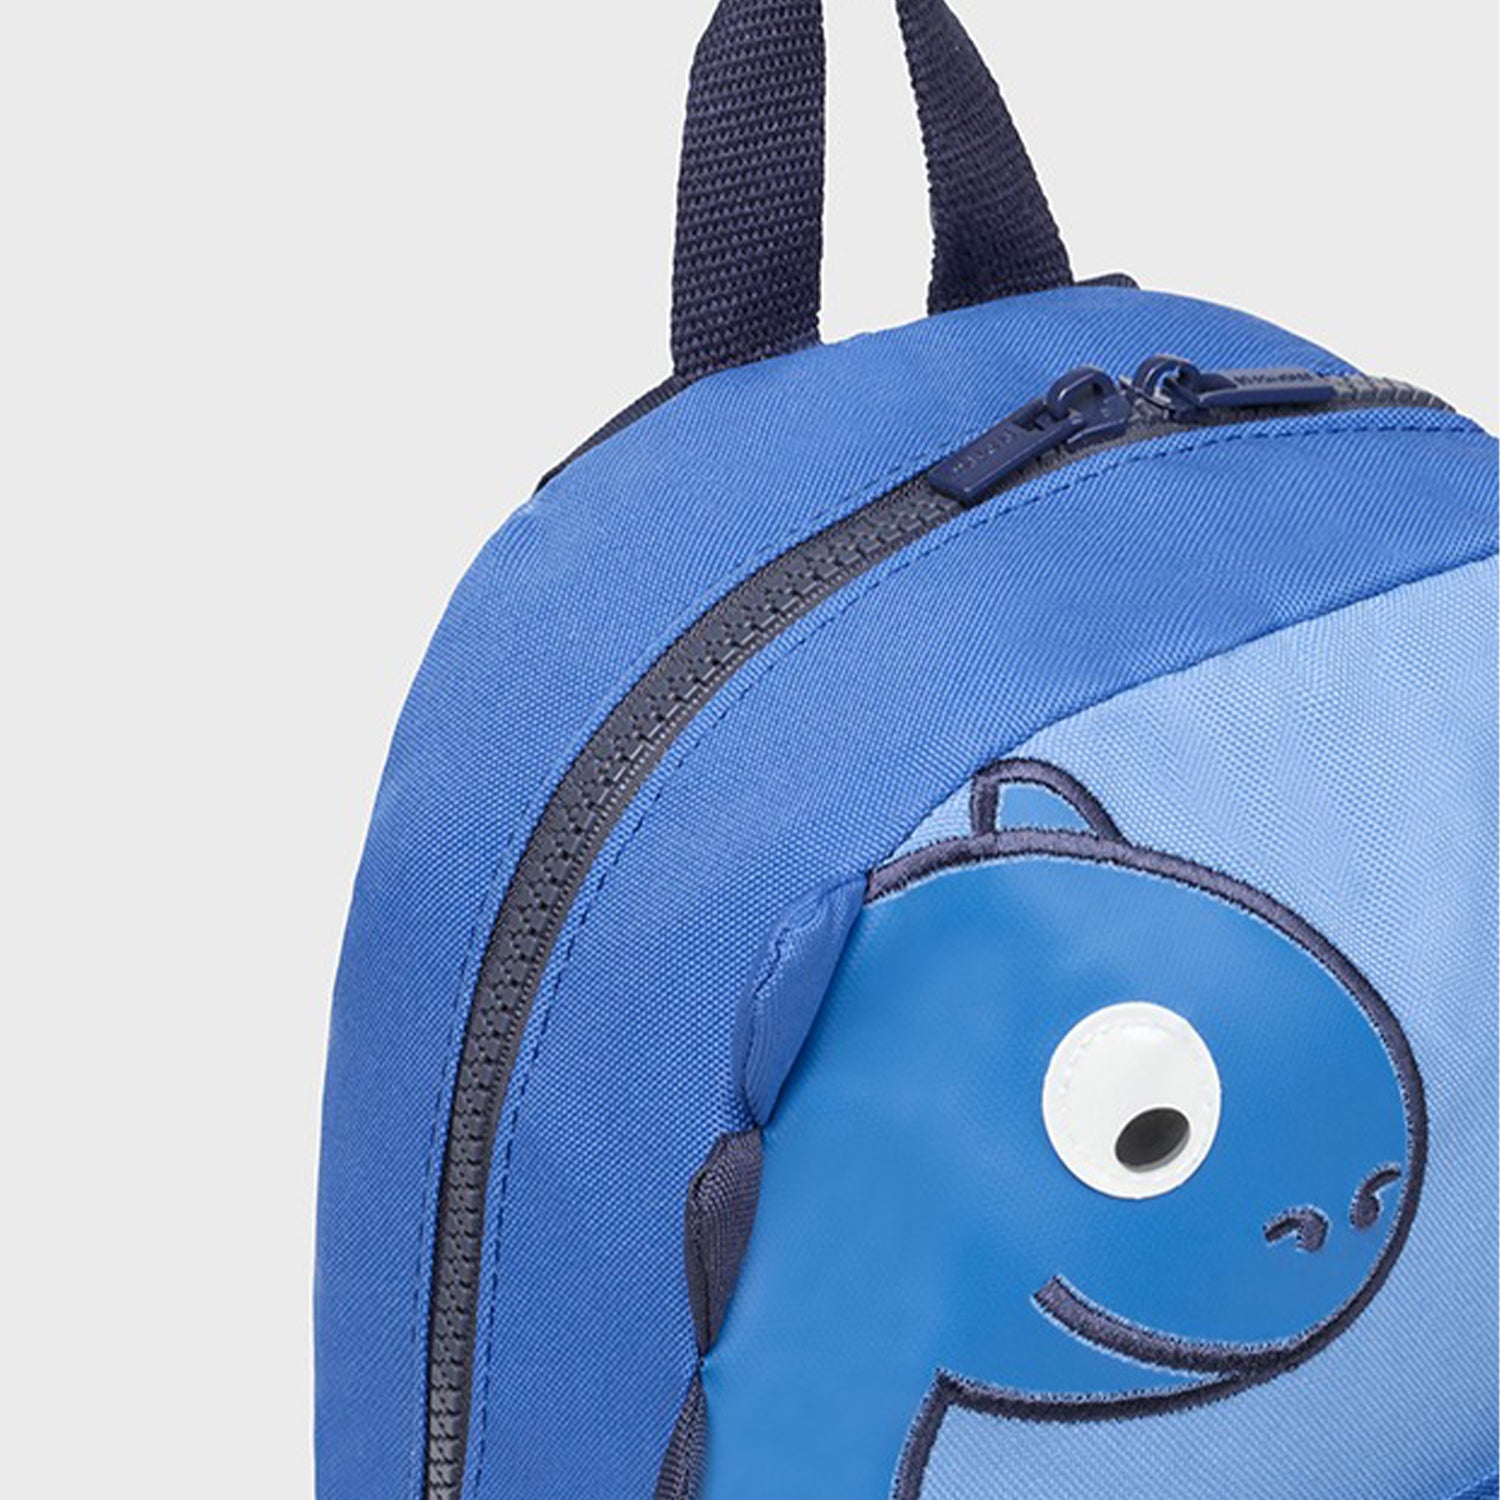 Blue Dino Backpack